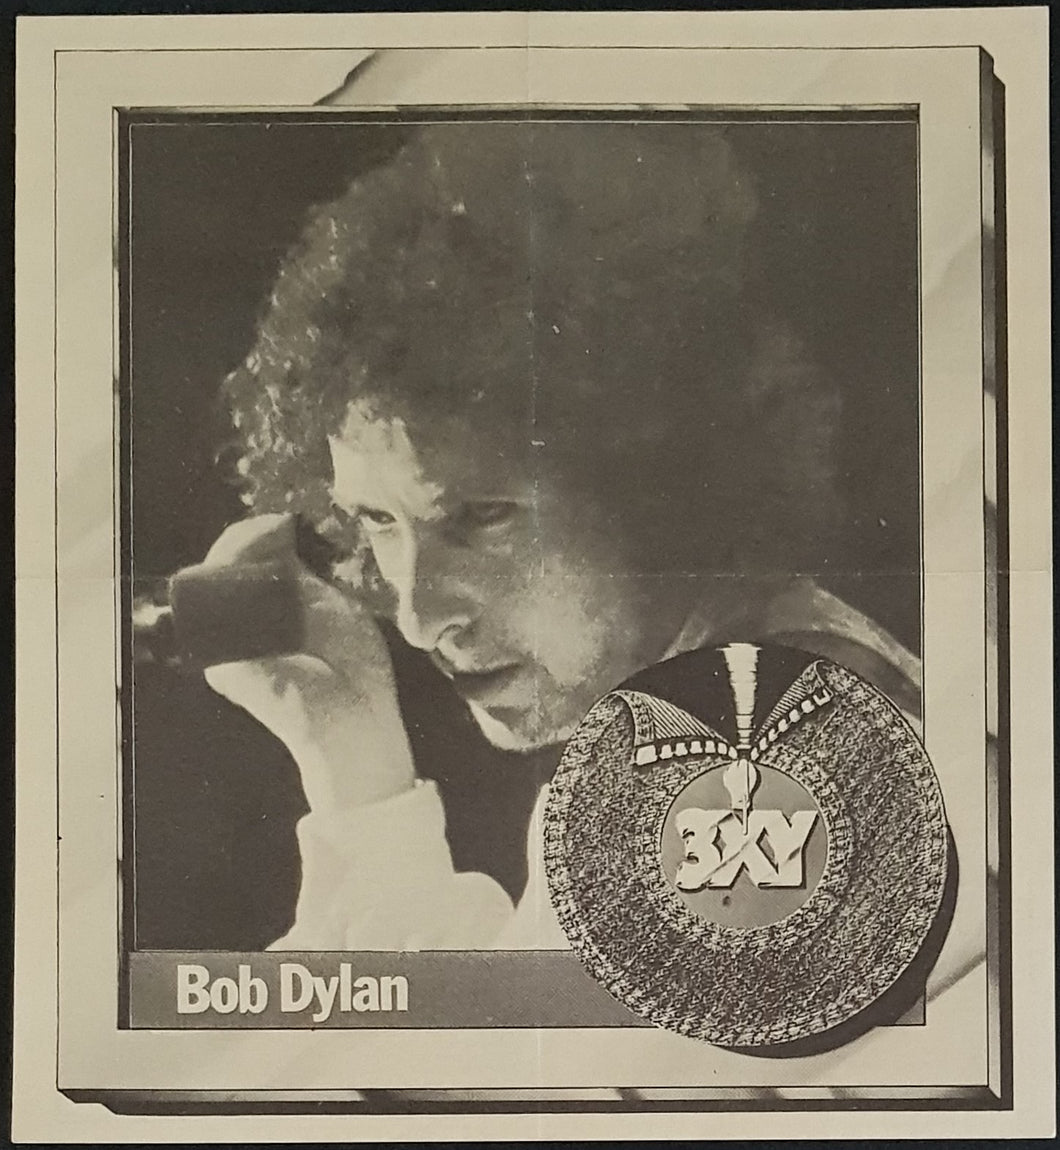 Bob Dylan - 3XY Music Survey Chart